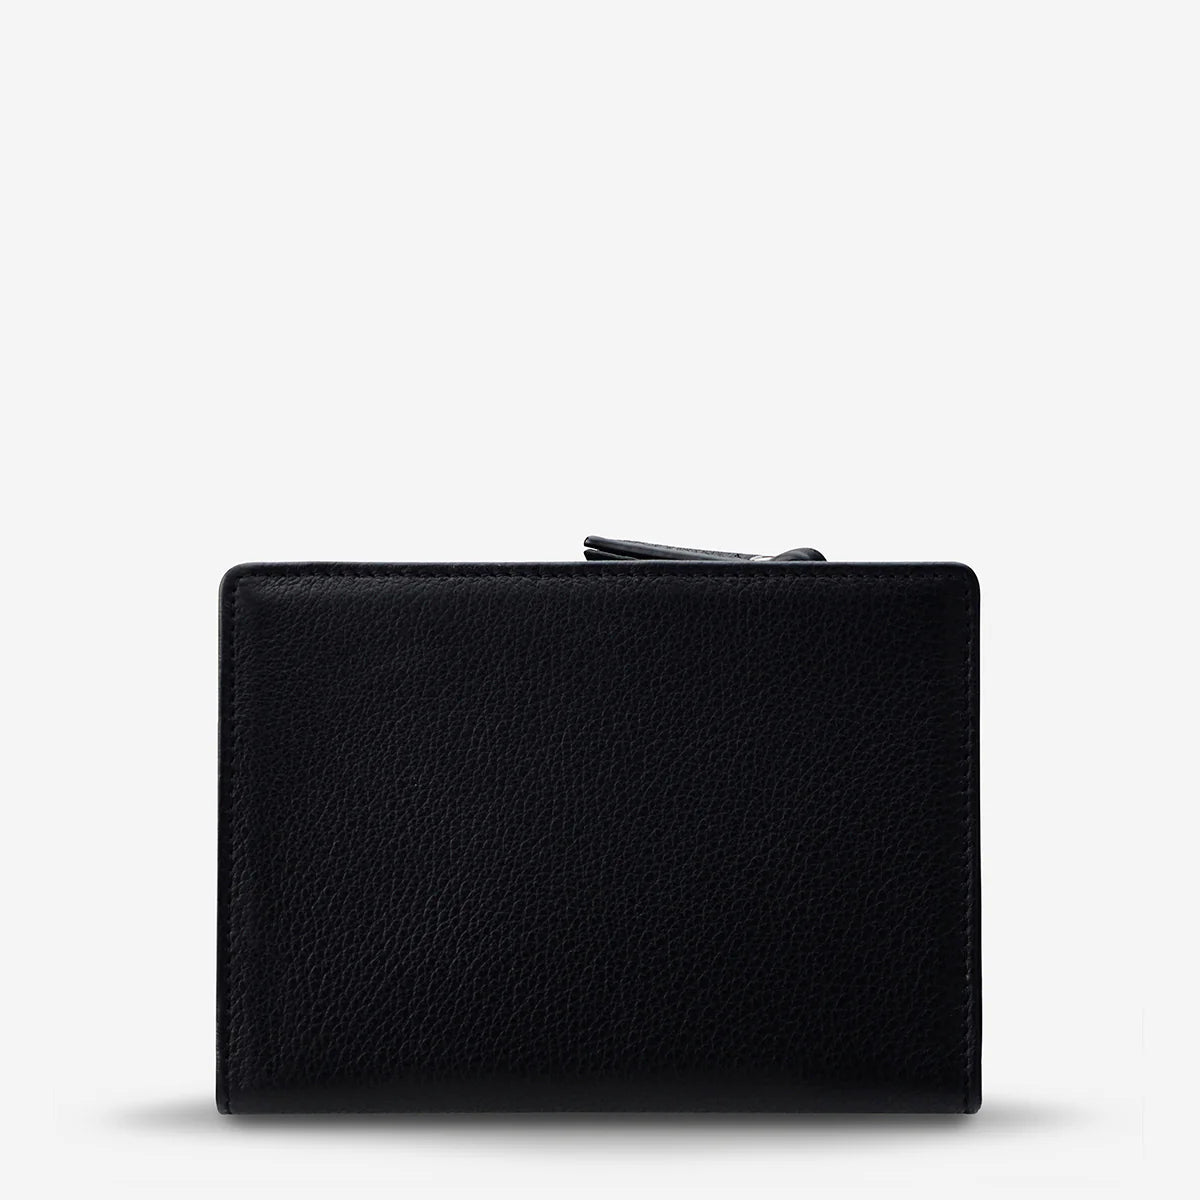 Insurgency Leather Wallet - Black